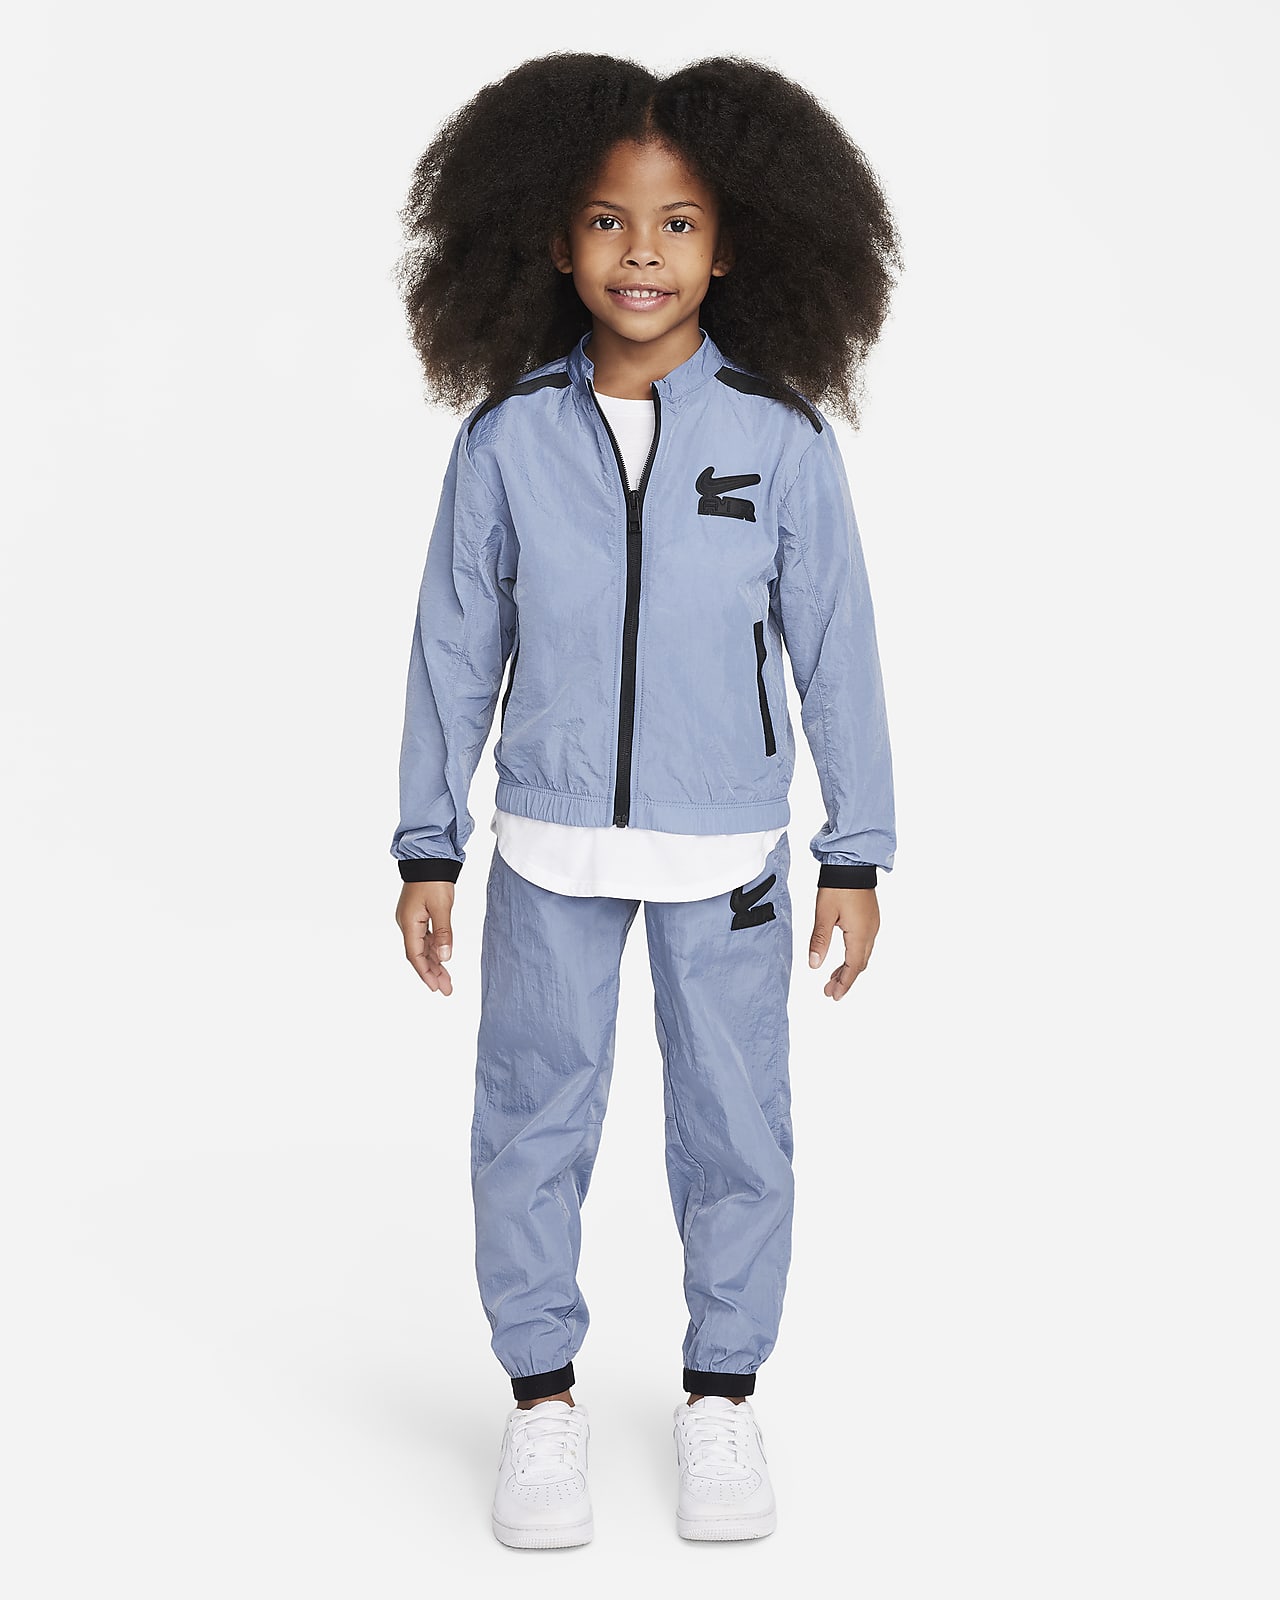 Enfant - Nike Vêtements Enfant (3-7 ans) - JD Sports France